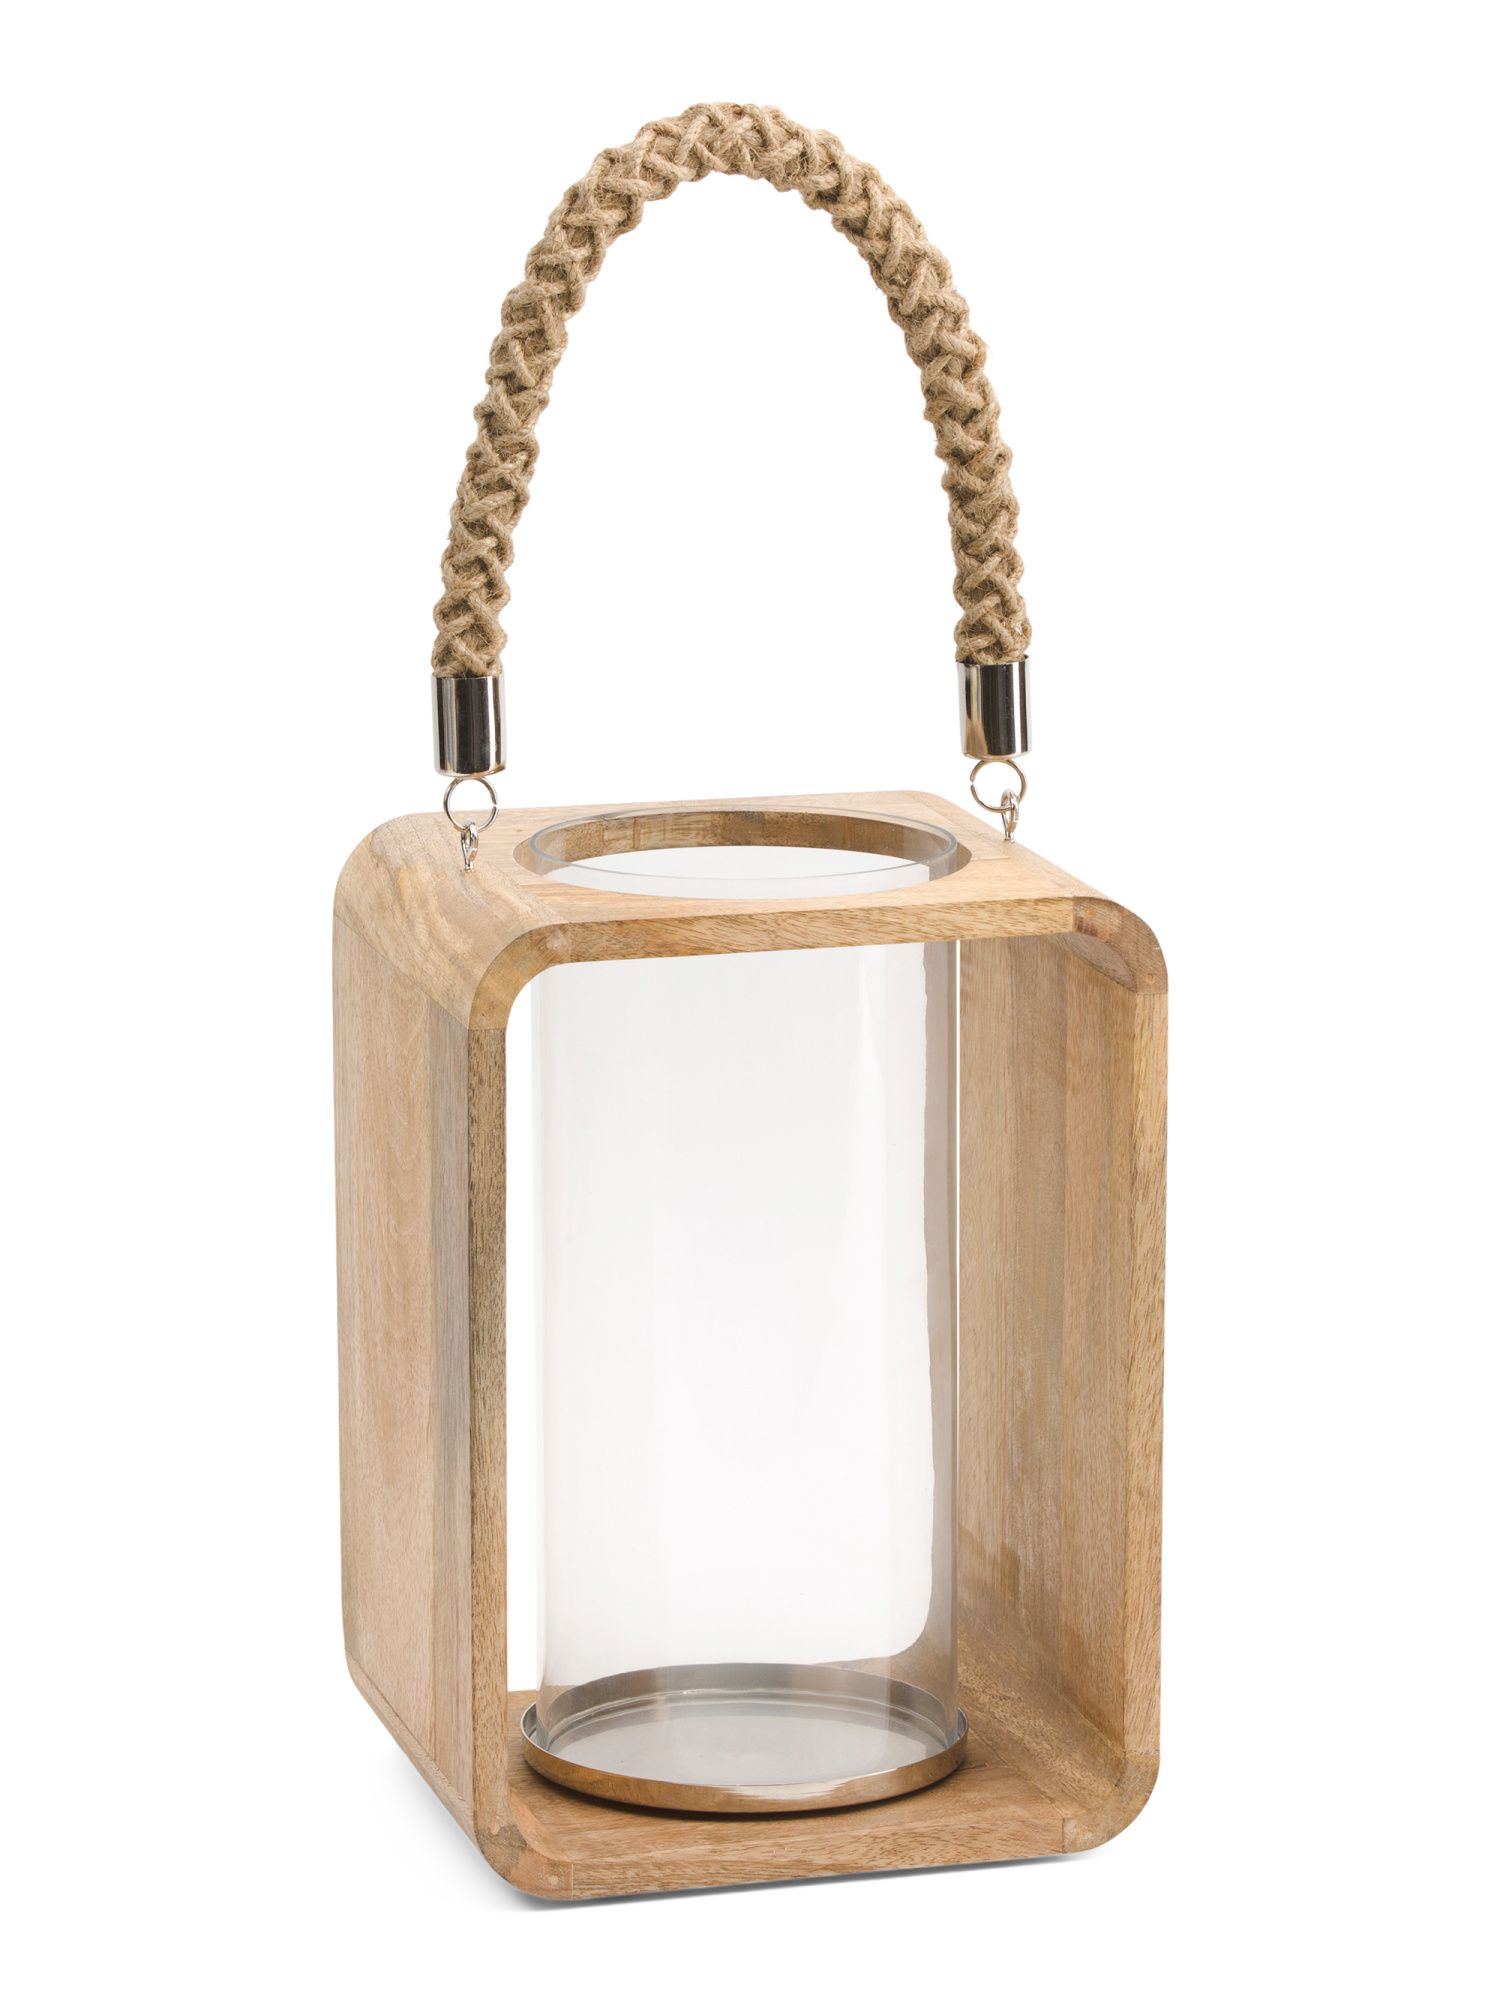 12in Wooden Hanging Hurricane Vase | TJ Maxx